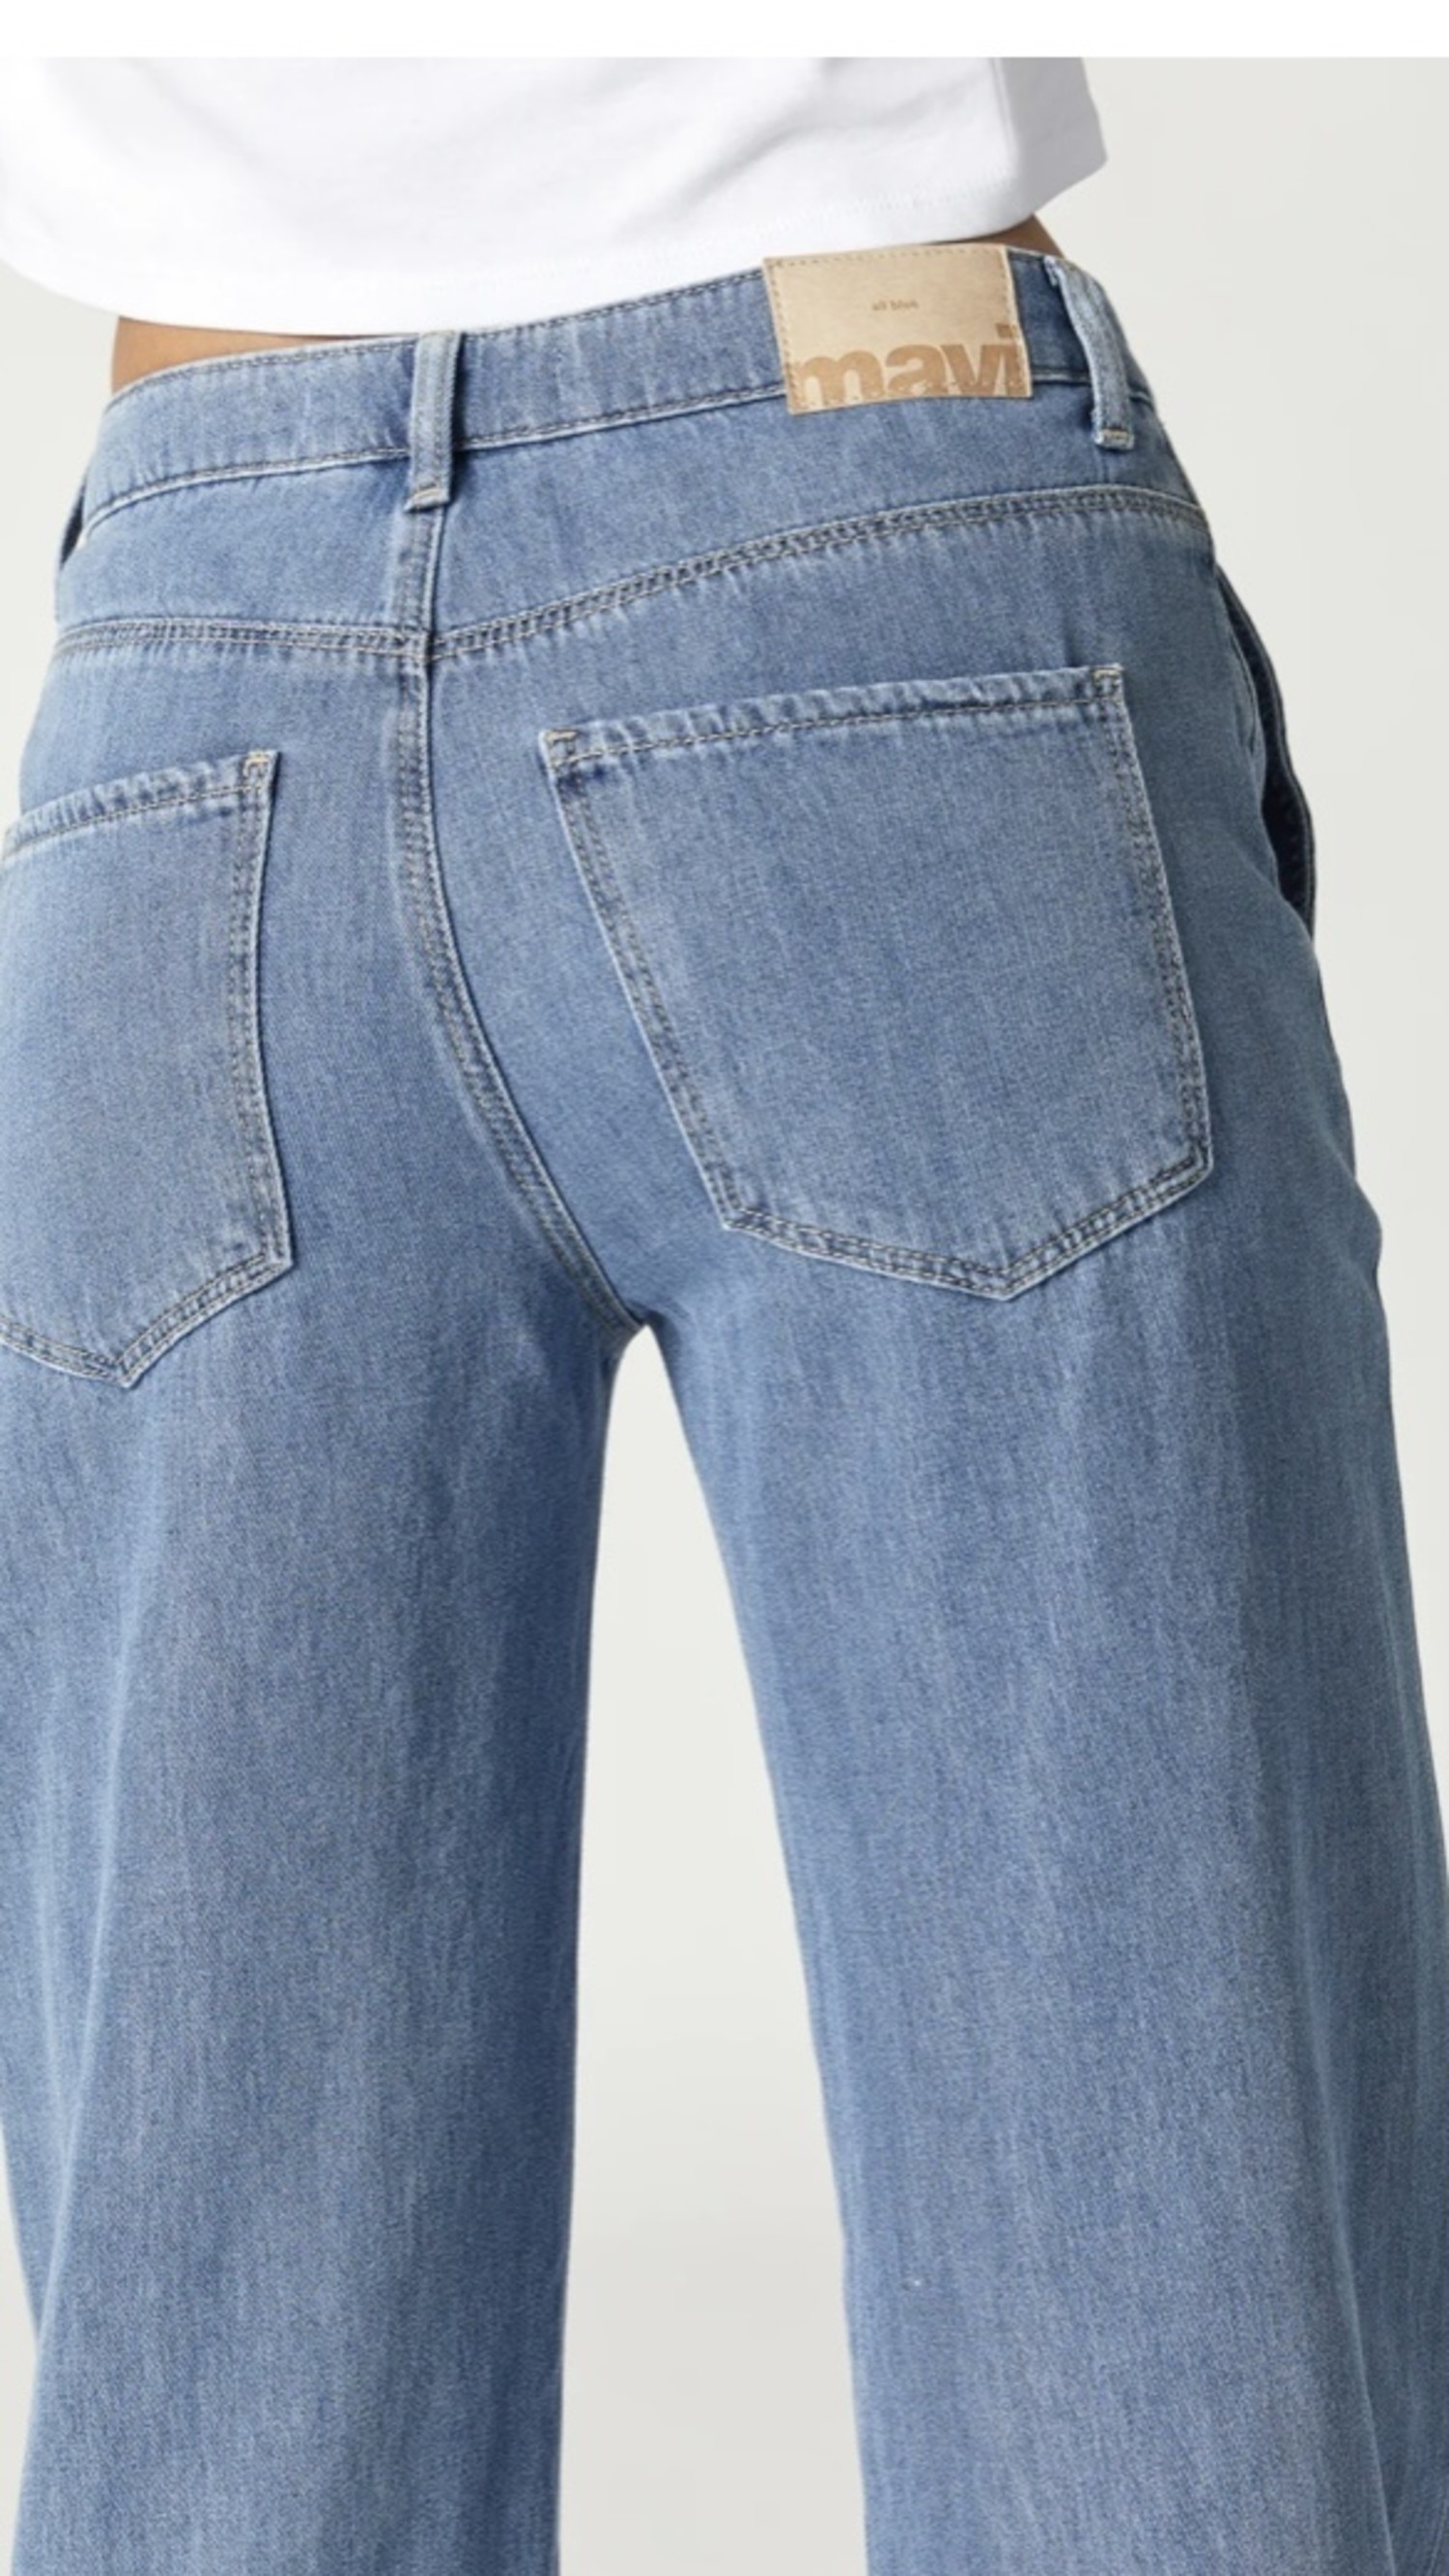 Jeans Flared By Mavi Size: 0